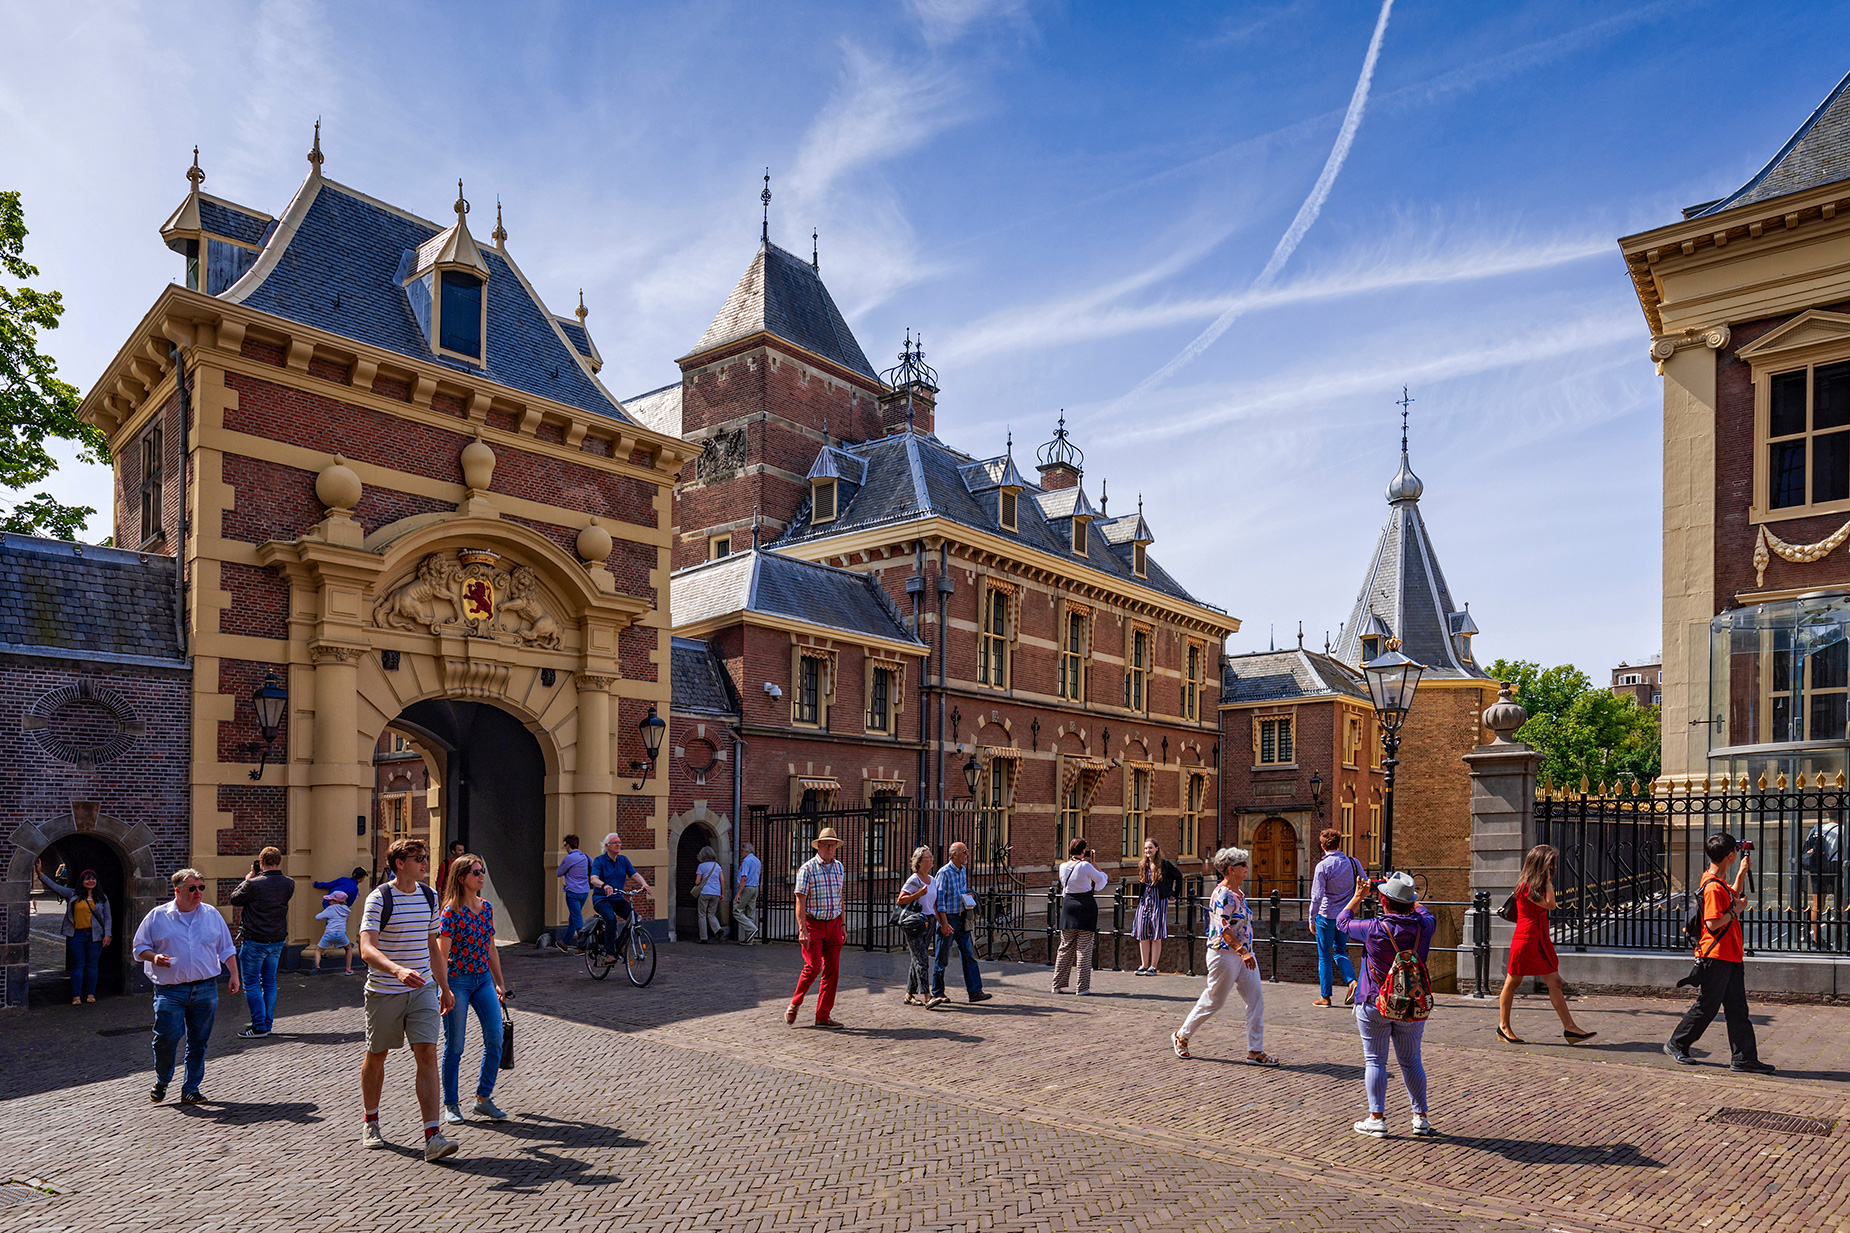 Binnenhof, the center of Dutch politics, in The Hague